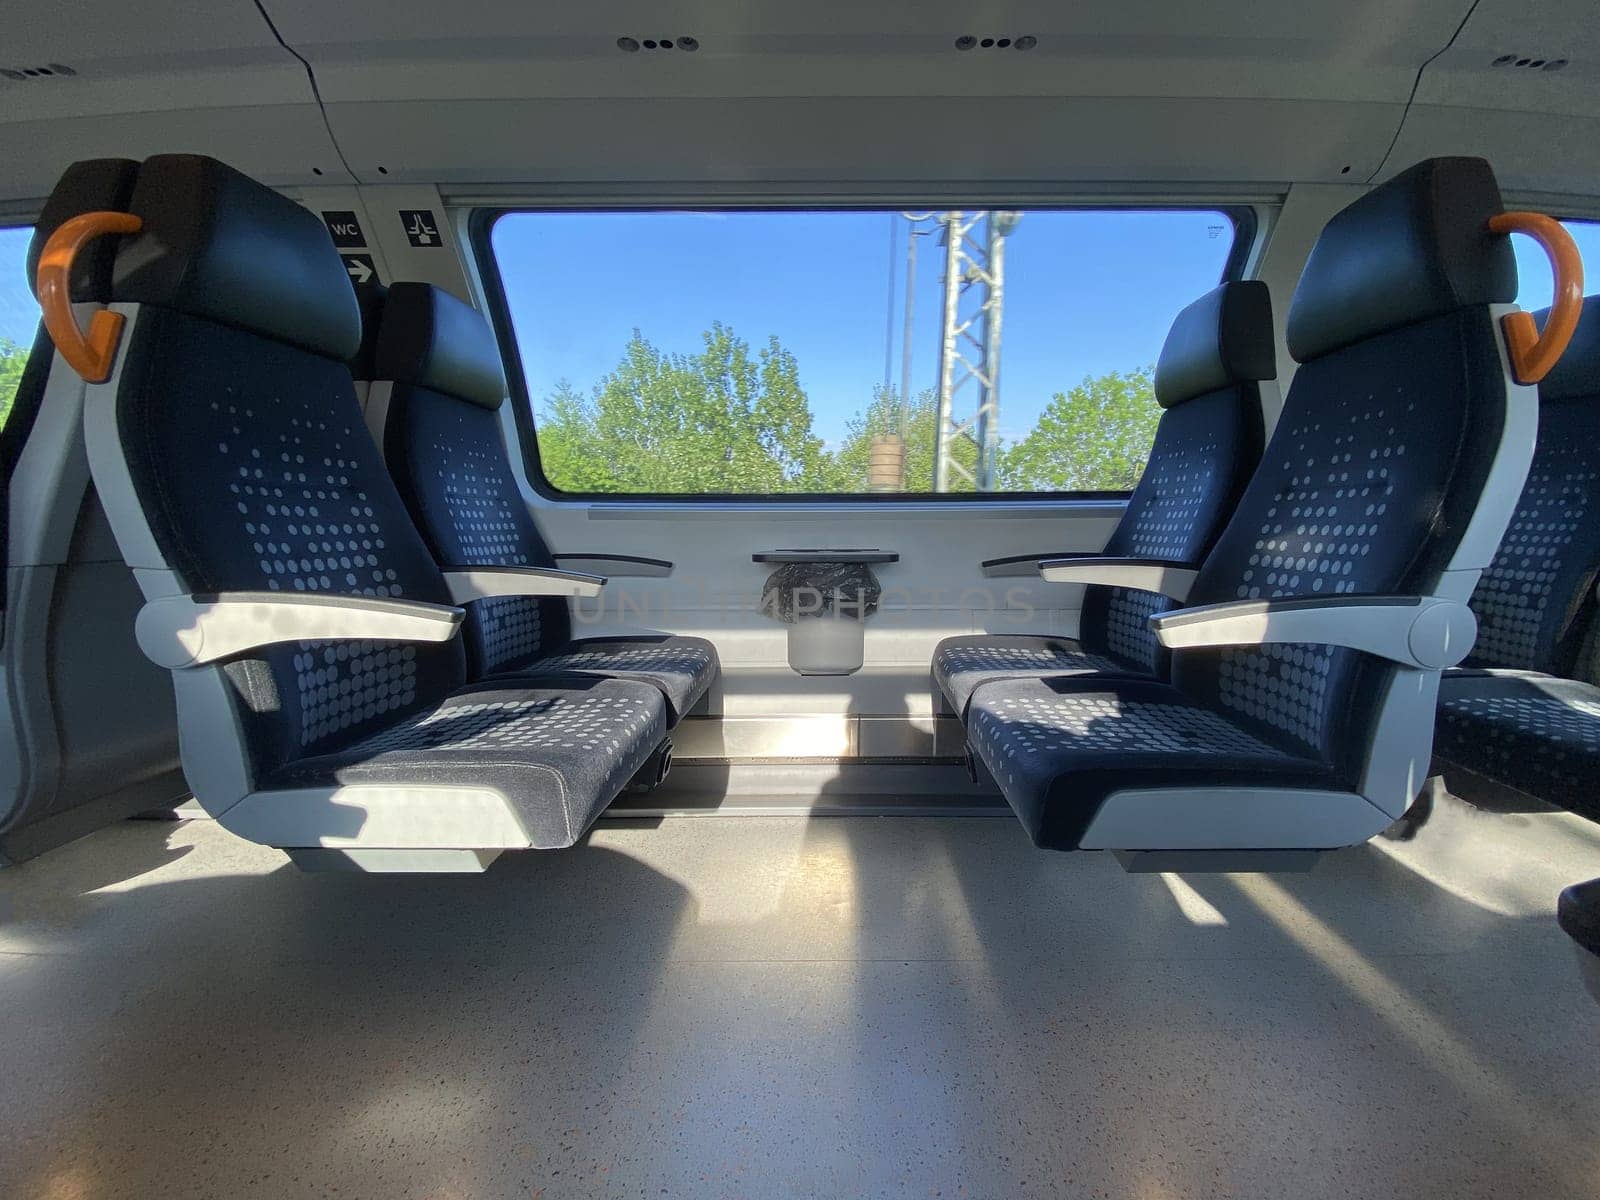 Modern european economy class fast train interior. by Maksym